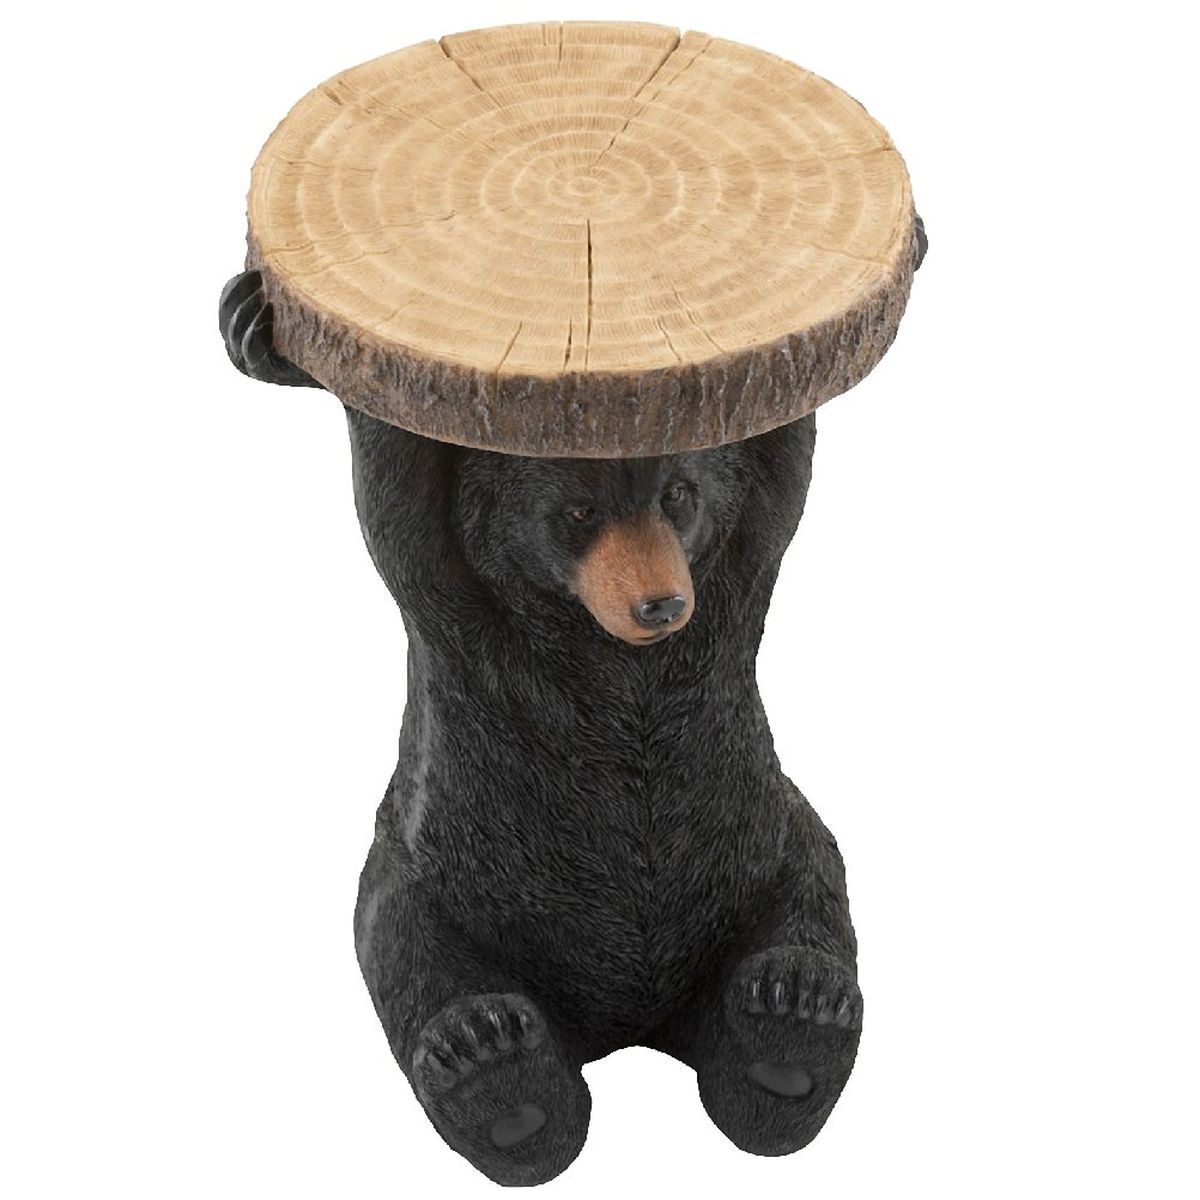 Bear pedestal table in resin